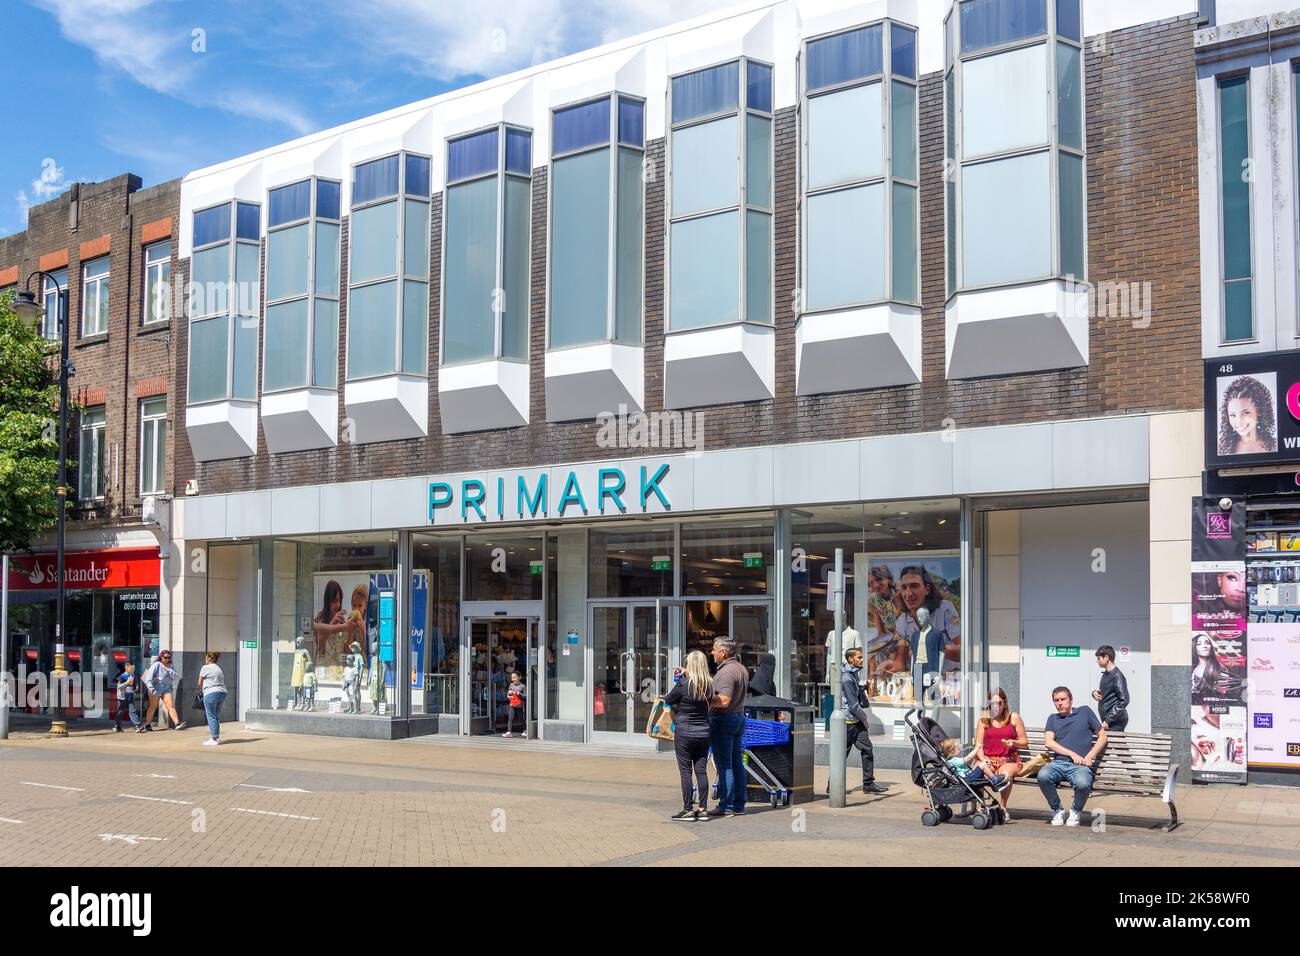 Entrance to Primark clothing store, George Street, Luton, Bedfordshire, England, United Kingdom Stock Photo